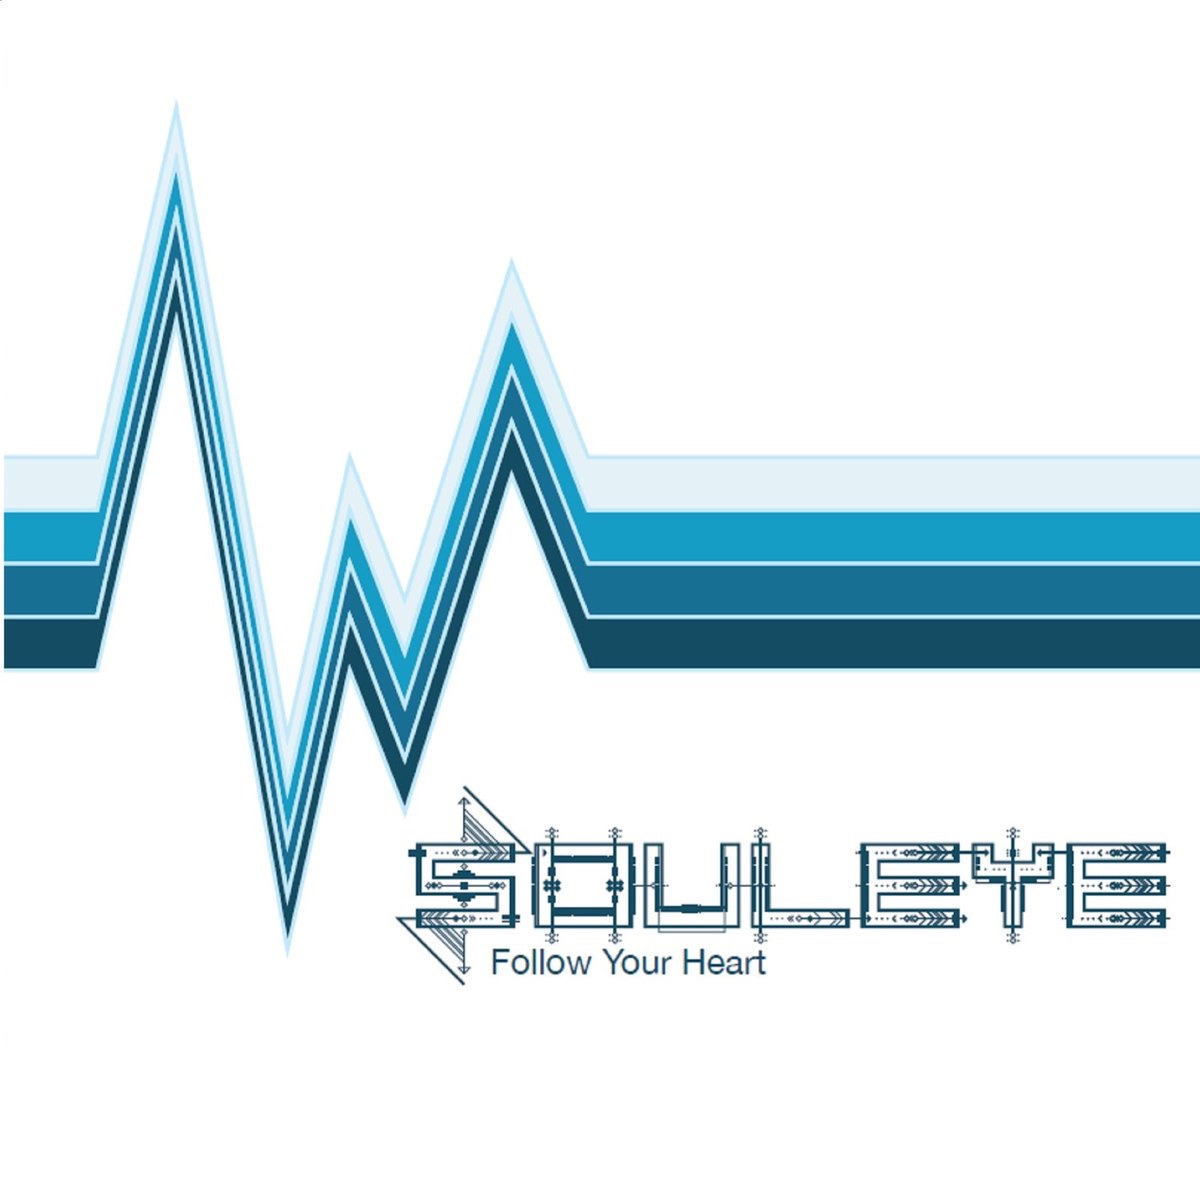  Souleye – “Follow Your Heart”